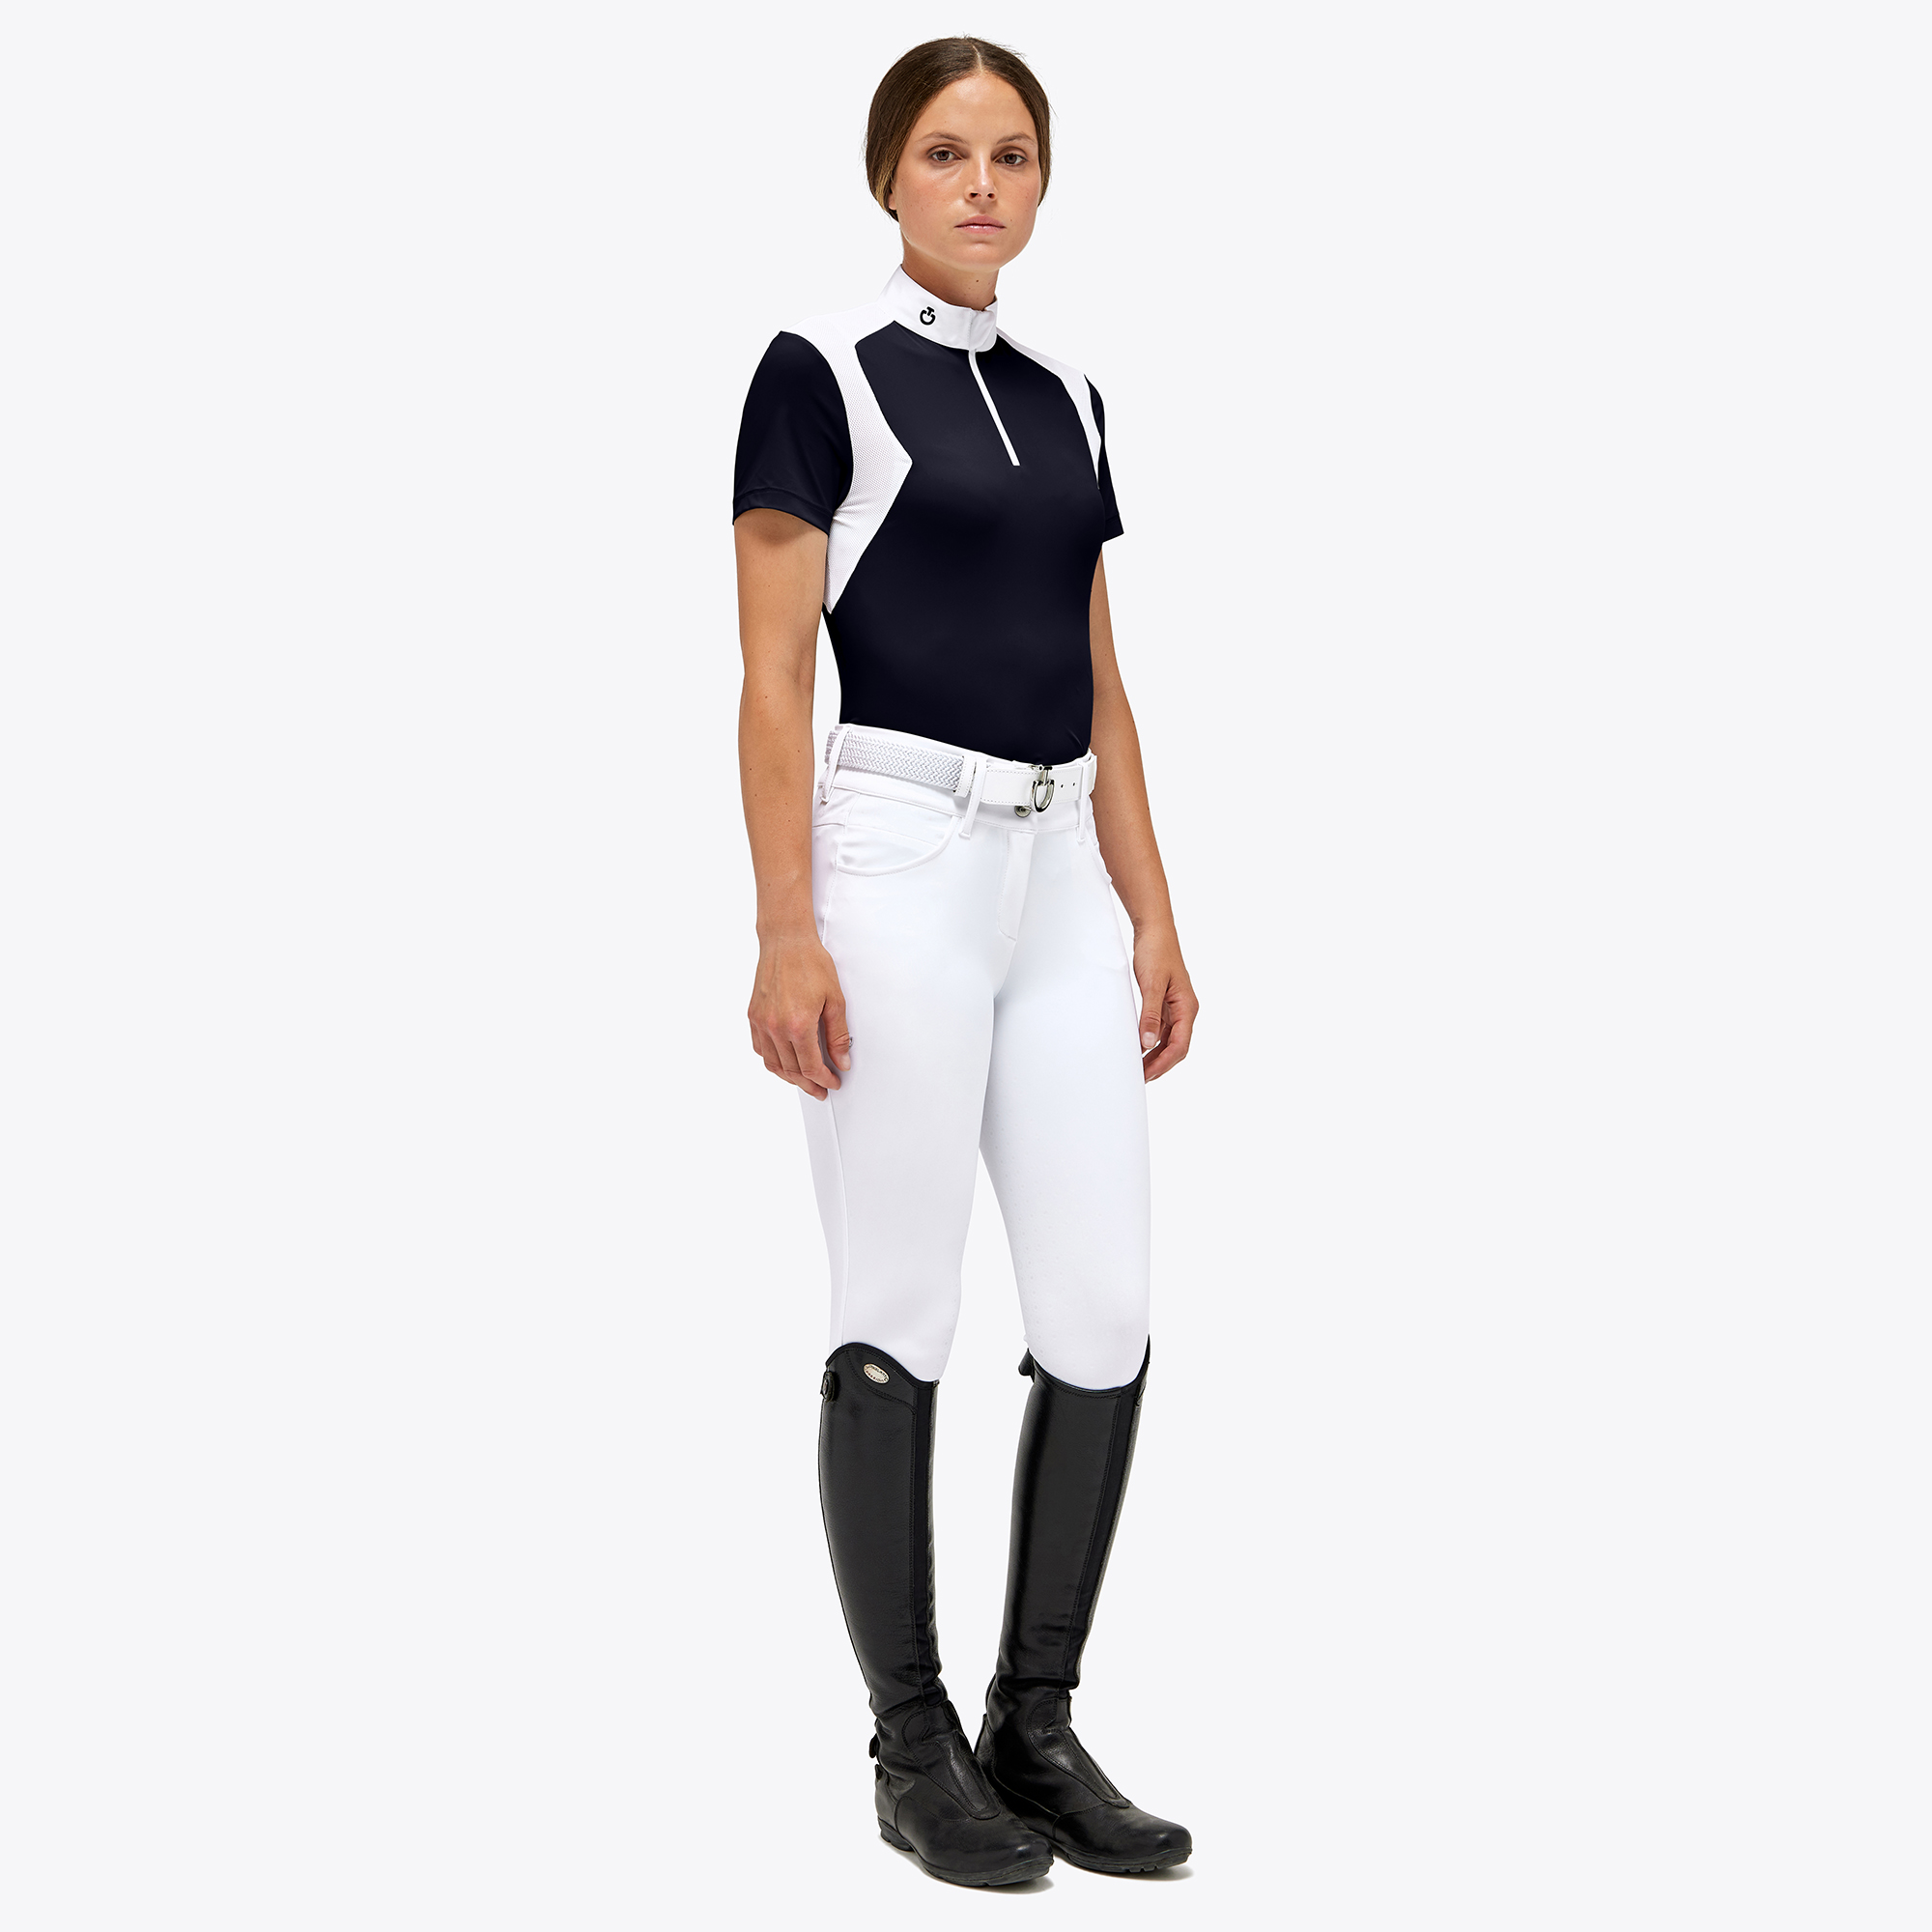 CAVALLERIA TOSCANA elegantes Damen Kurzarm Turniershirt Jersey Mesh - white/knit - XL - 4